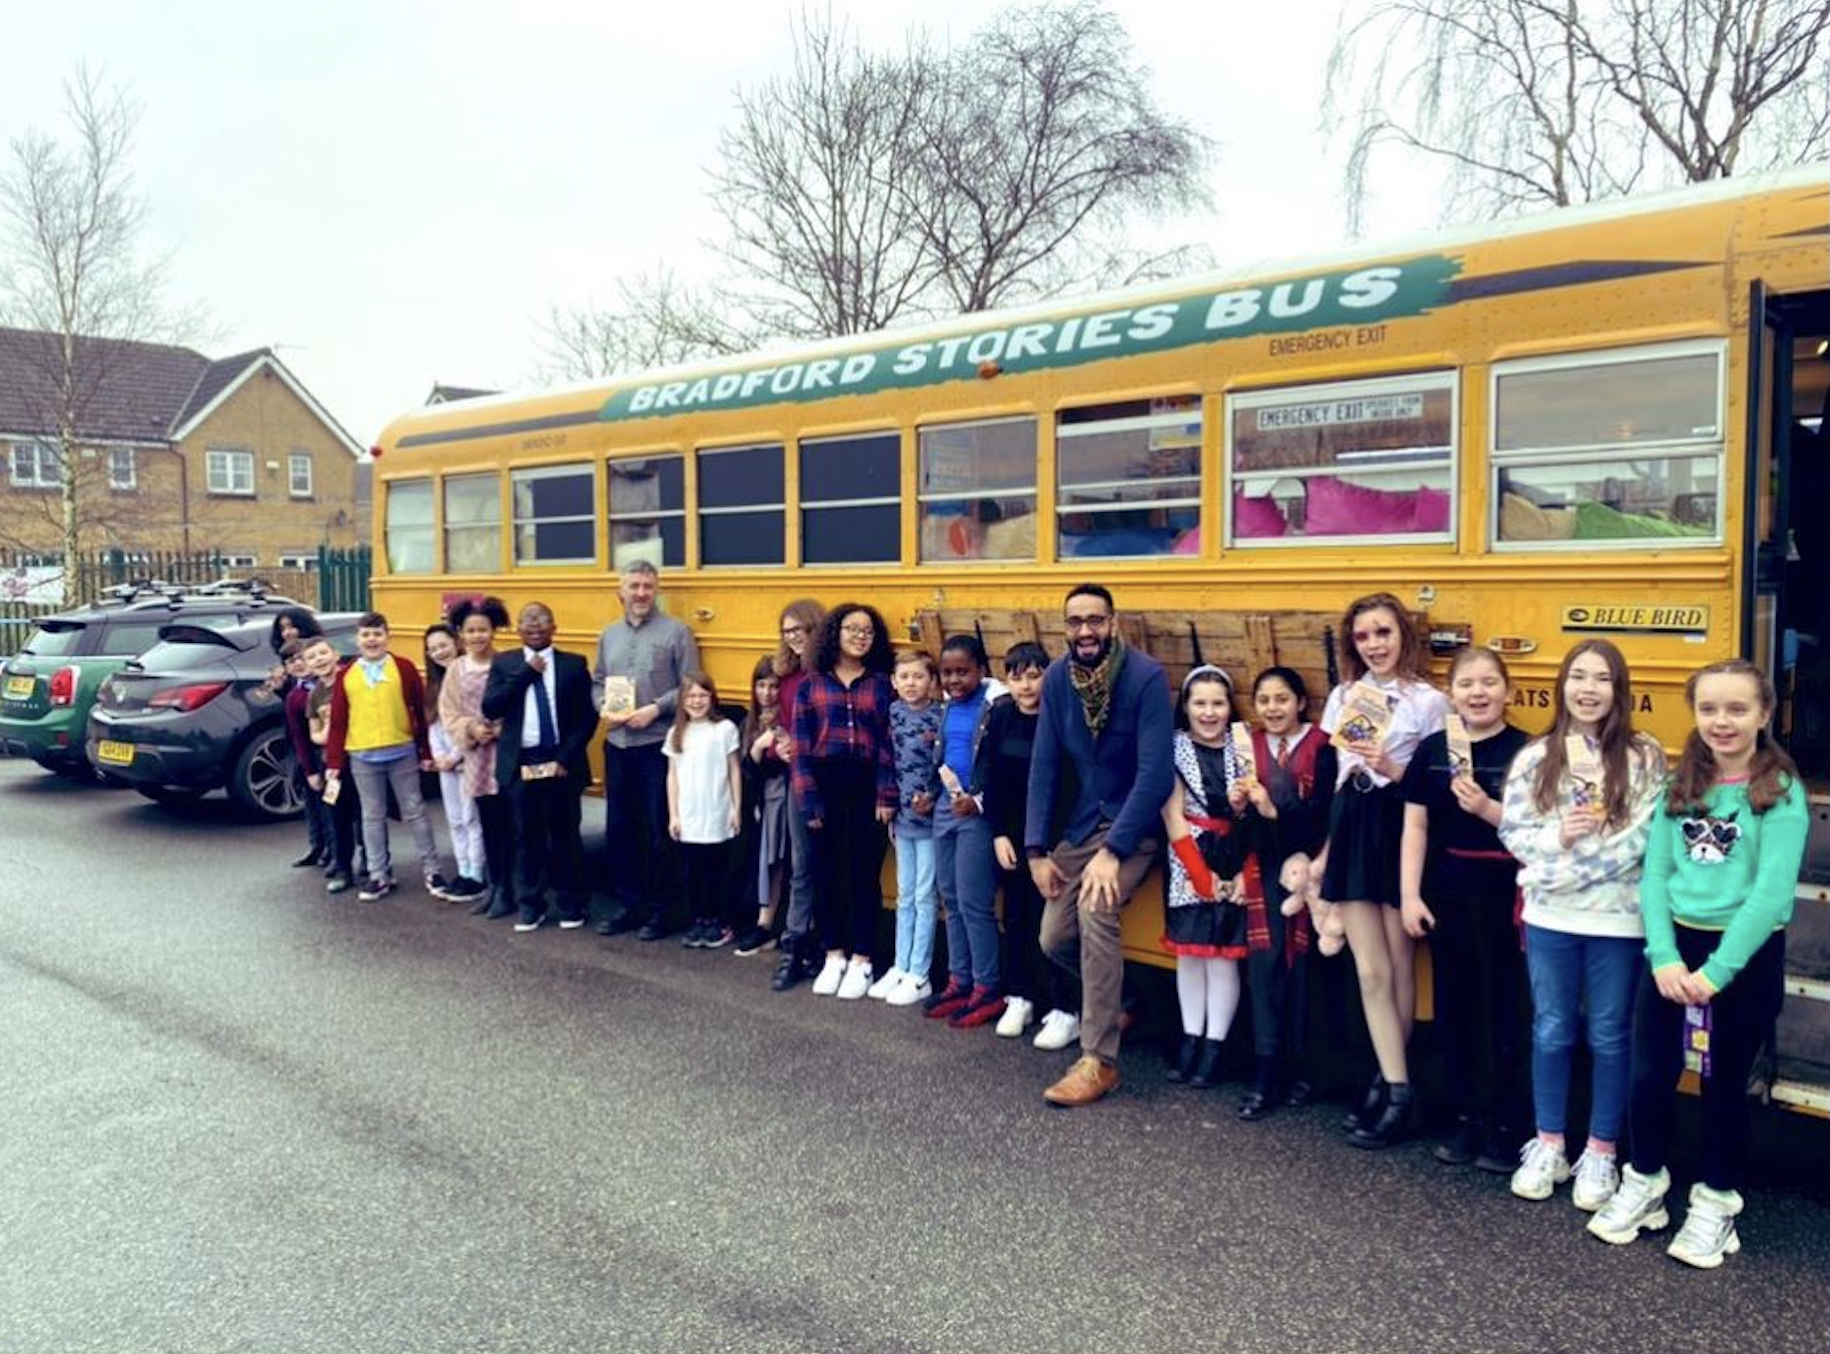 Bradford Stories School Bus